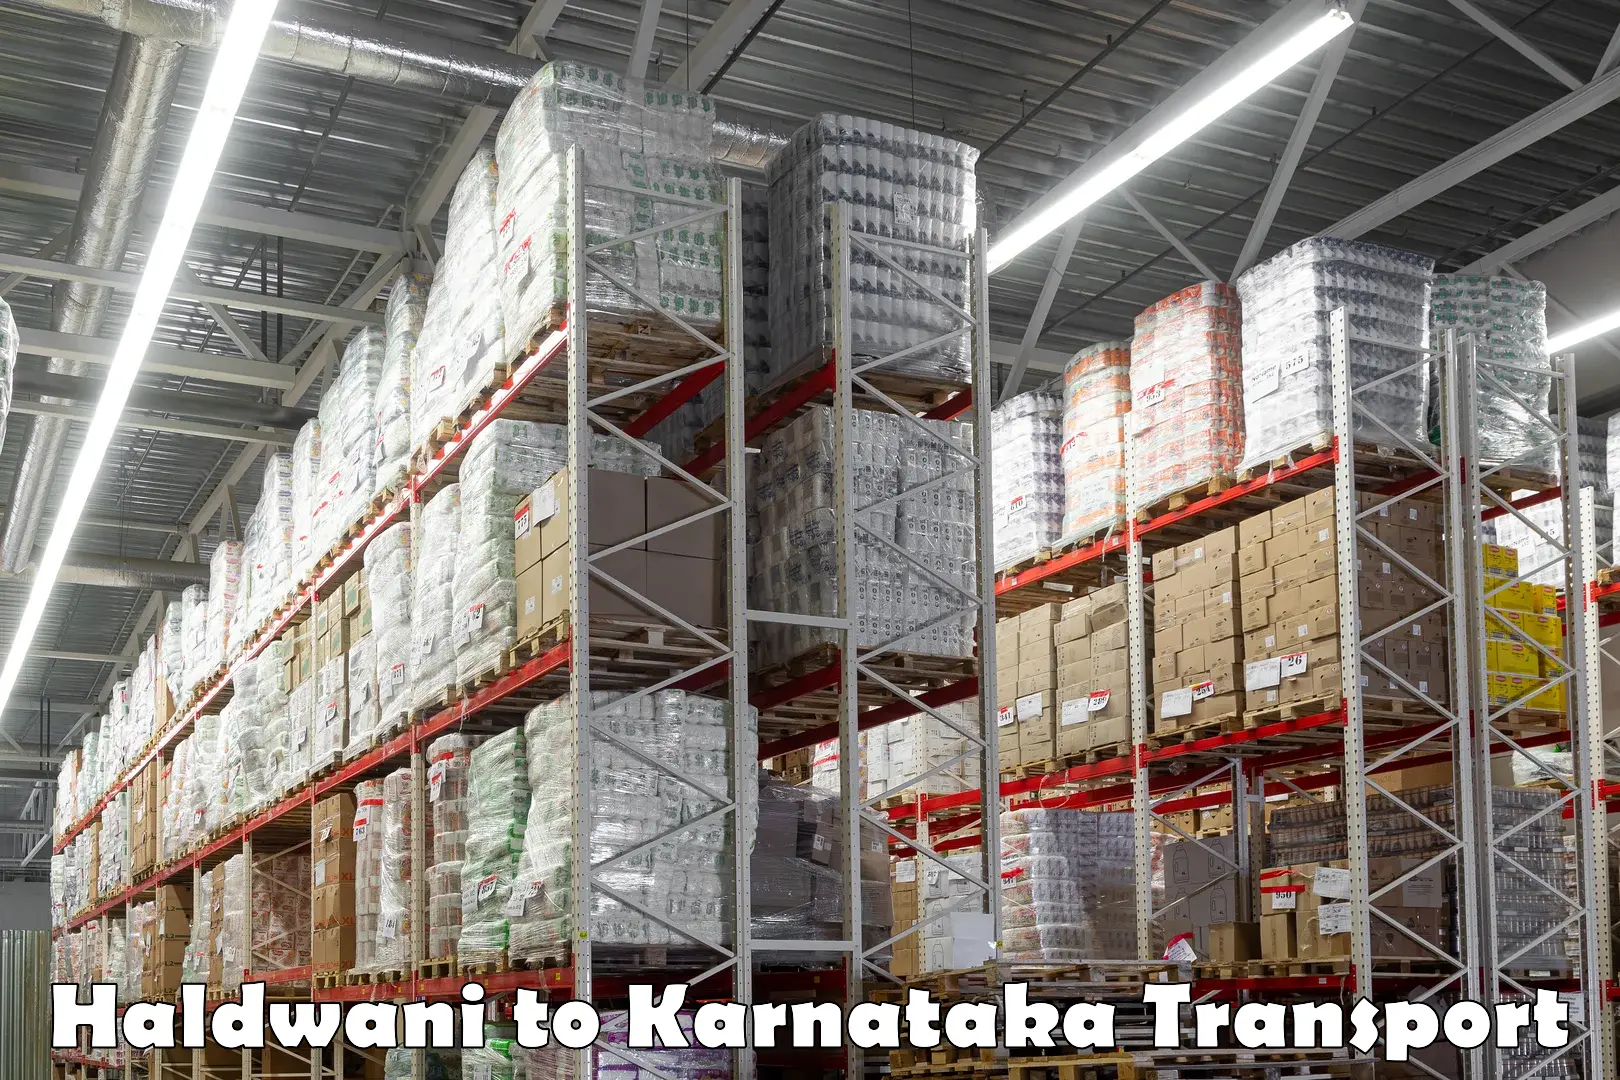 Shipping partner Haldwani to Karnataka